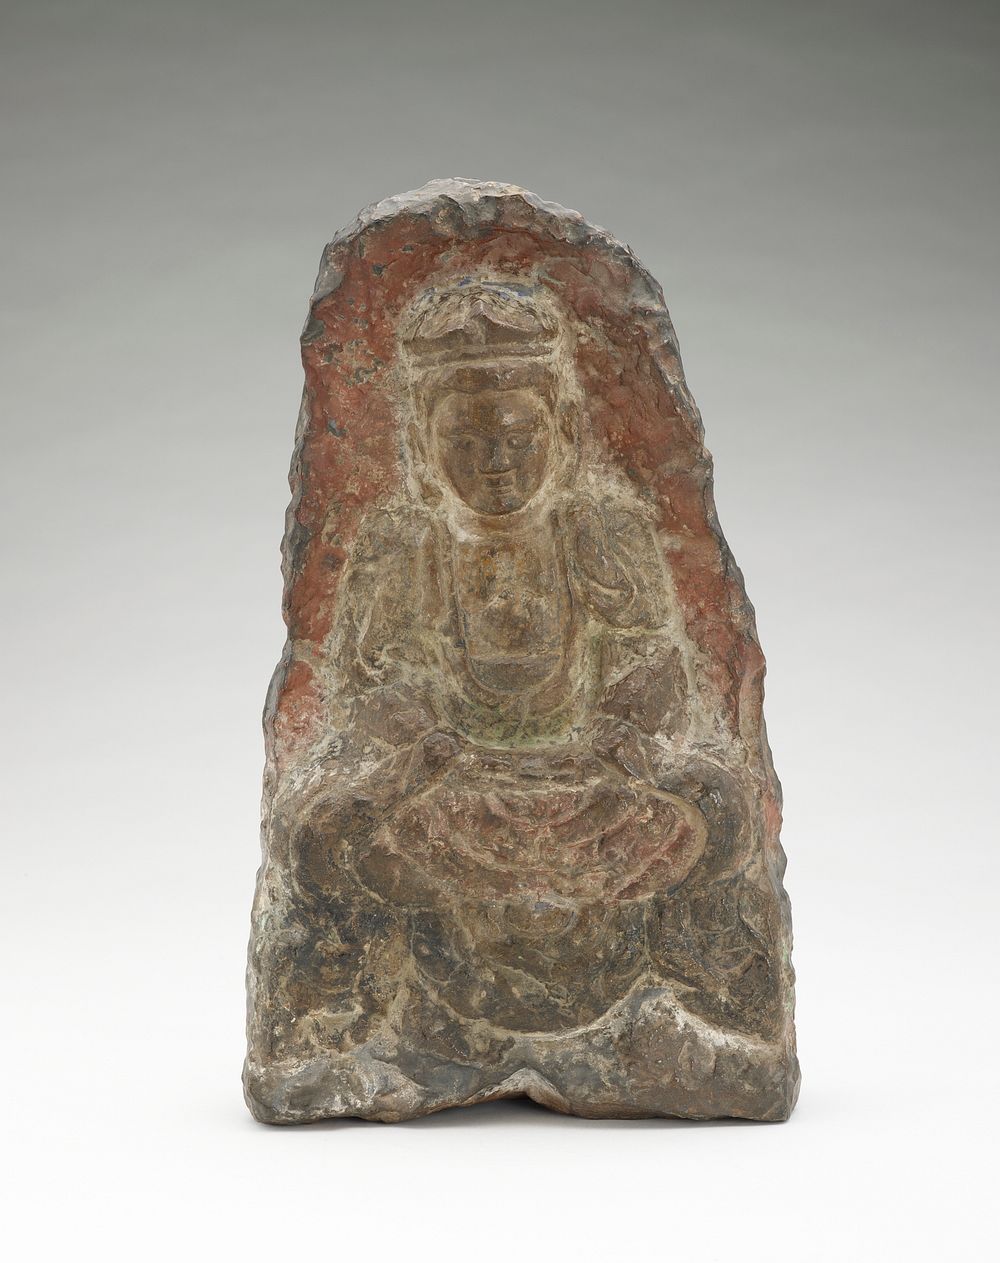 Seated bodhisattva